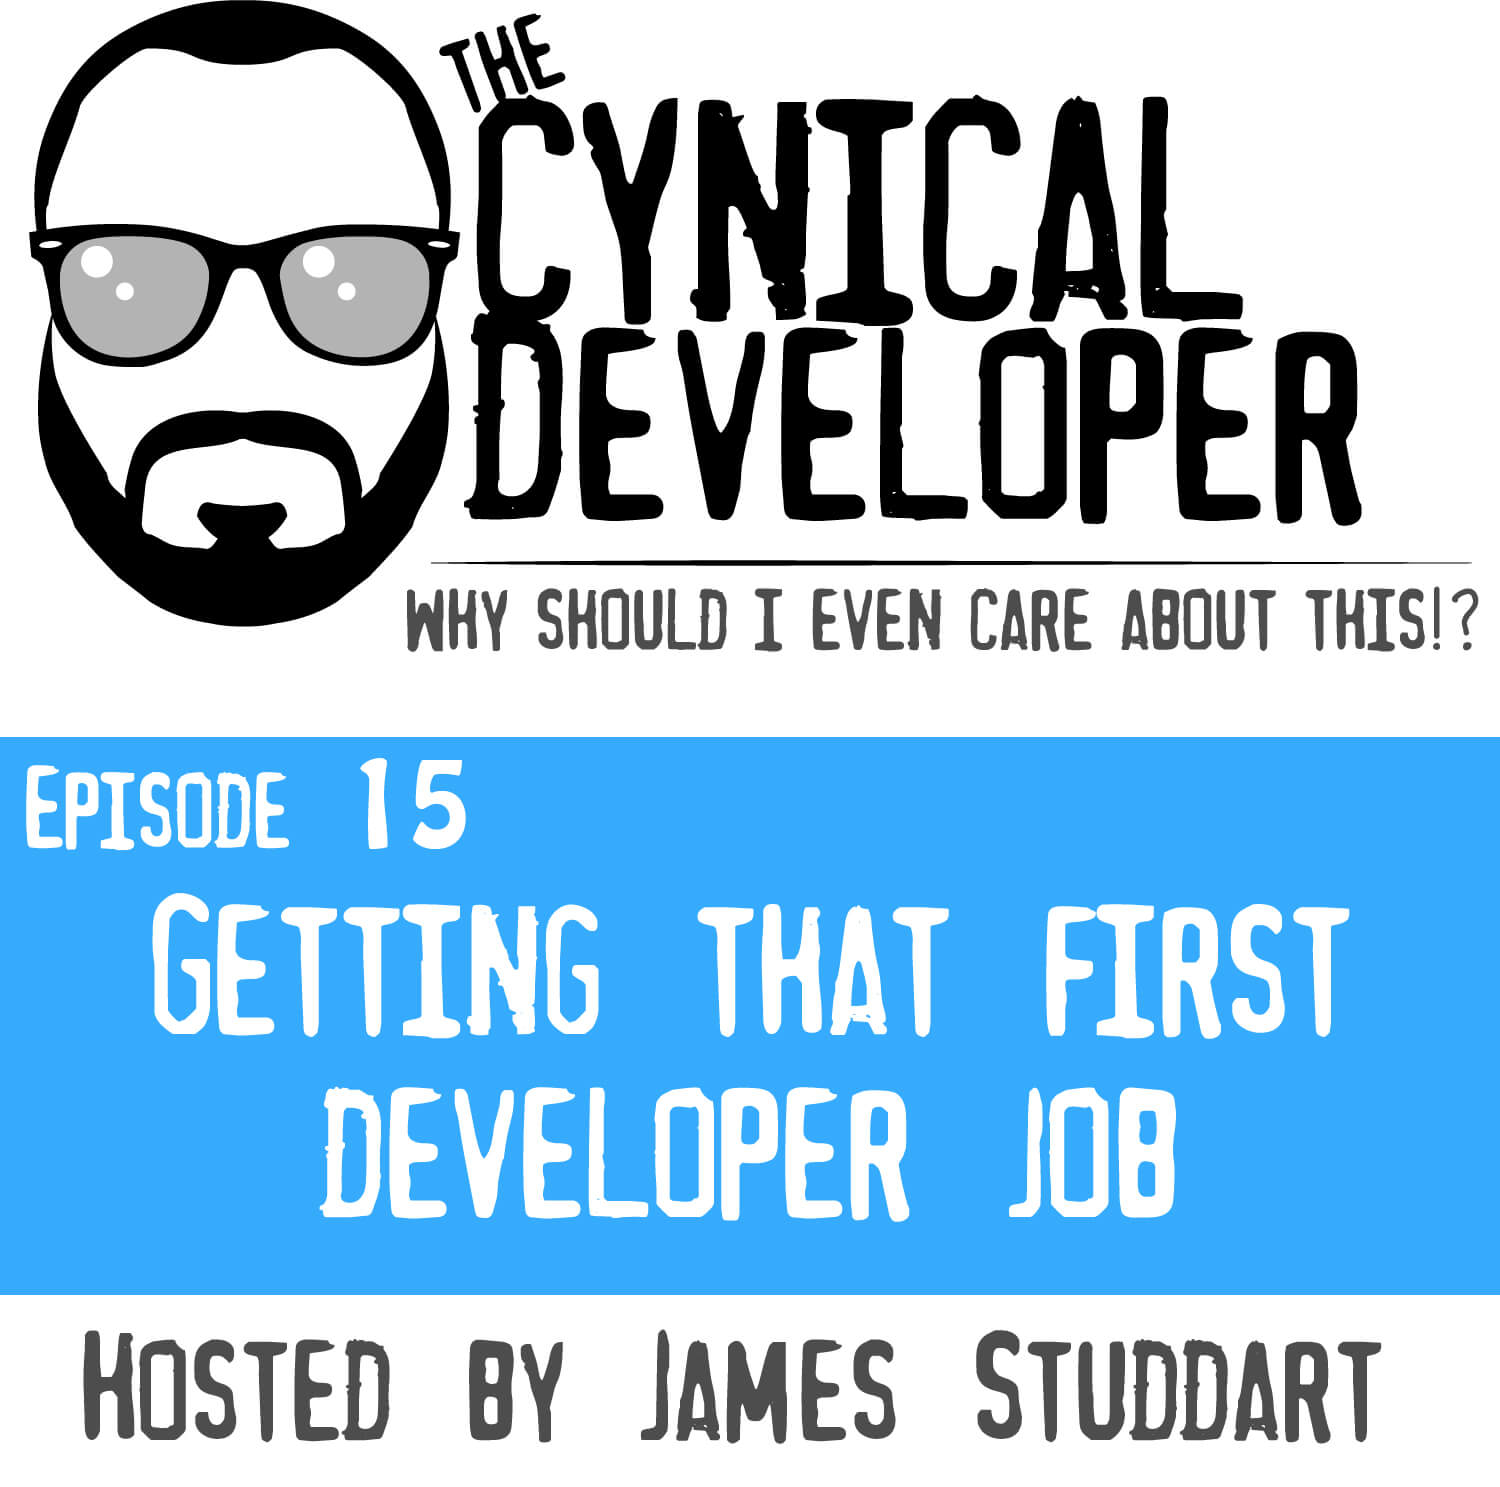 Episode 15 - Getting that first developer job